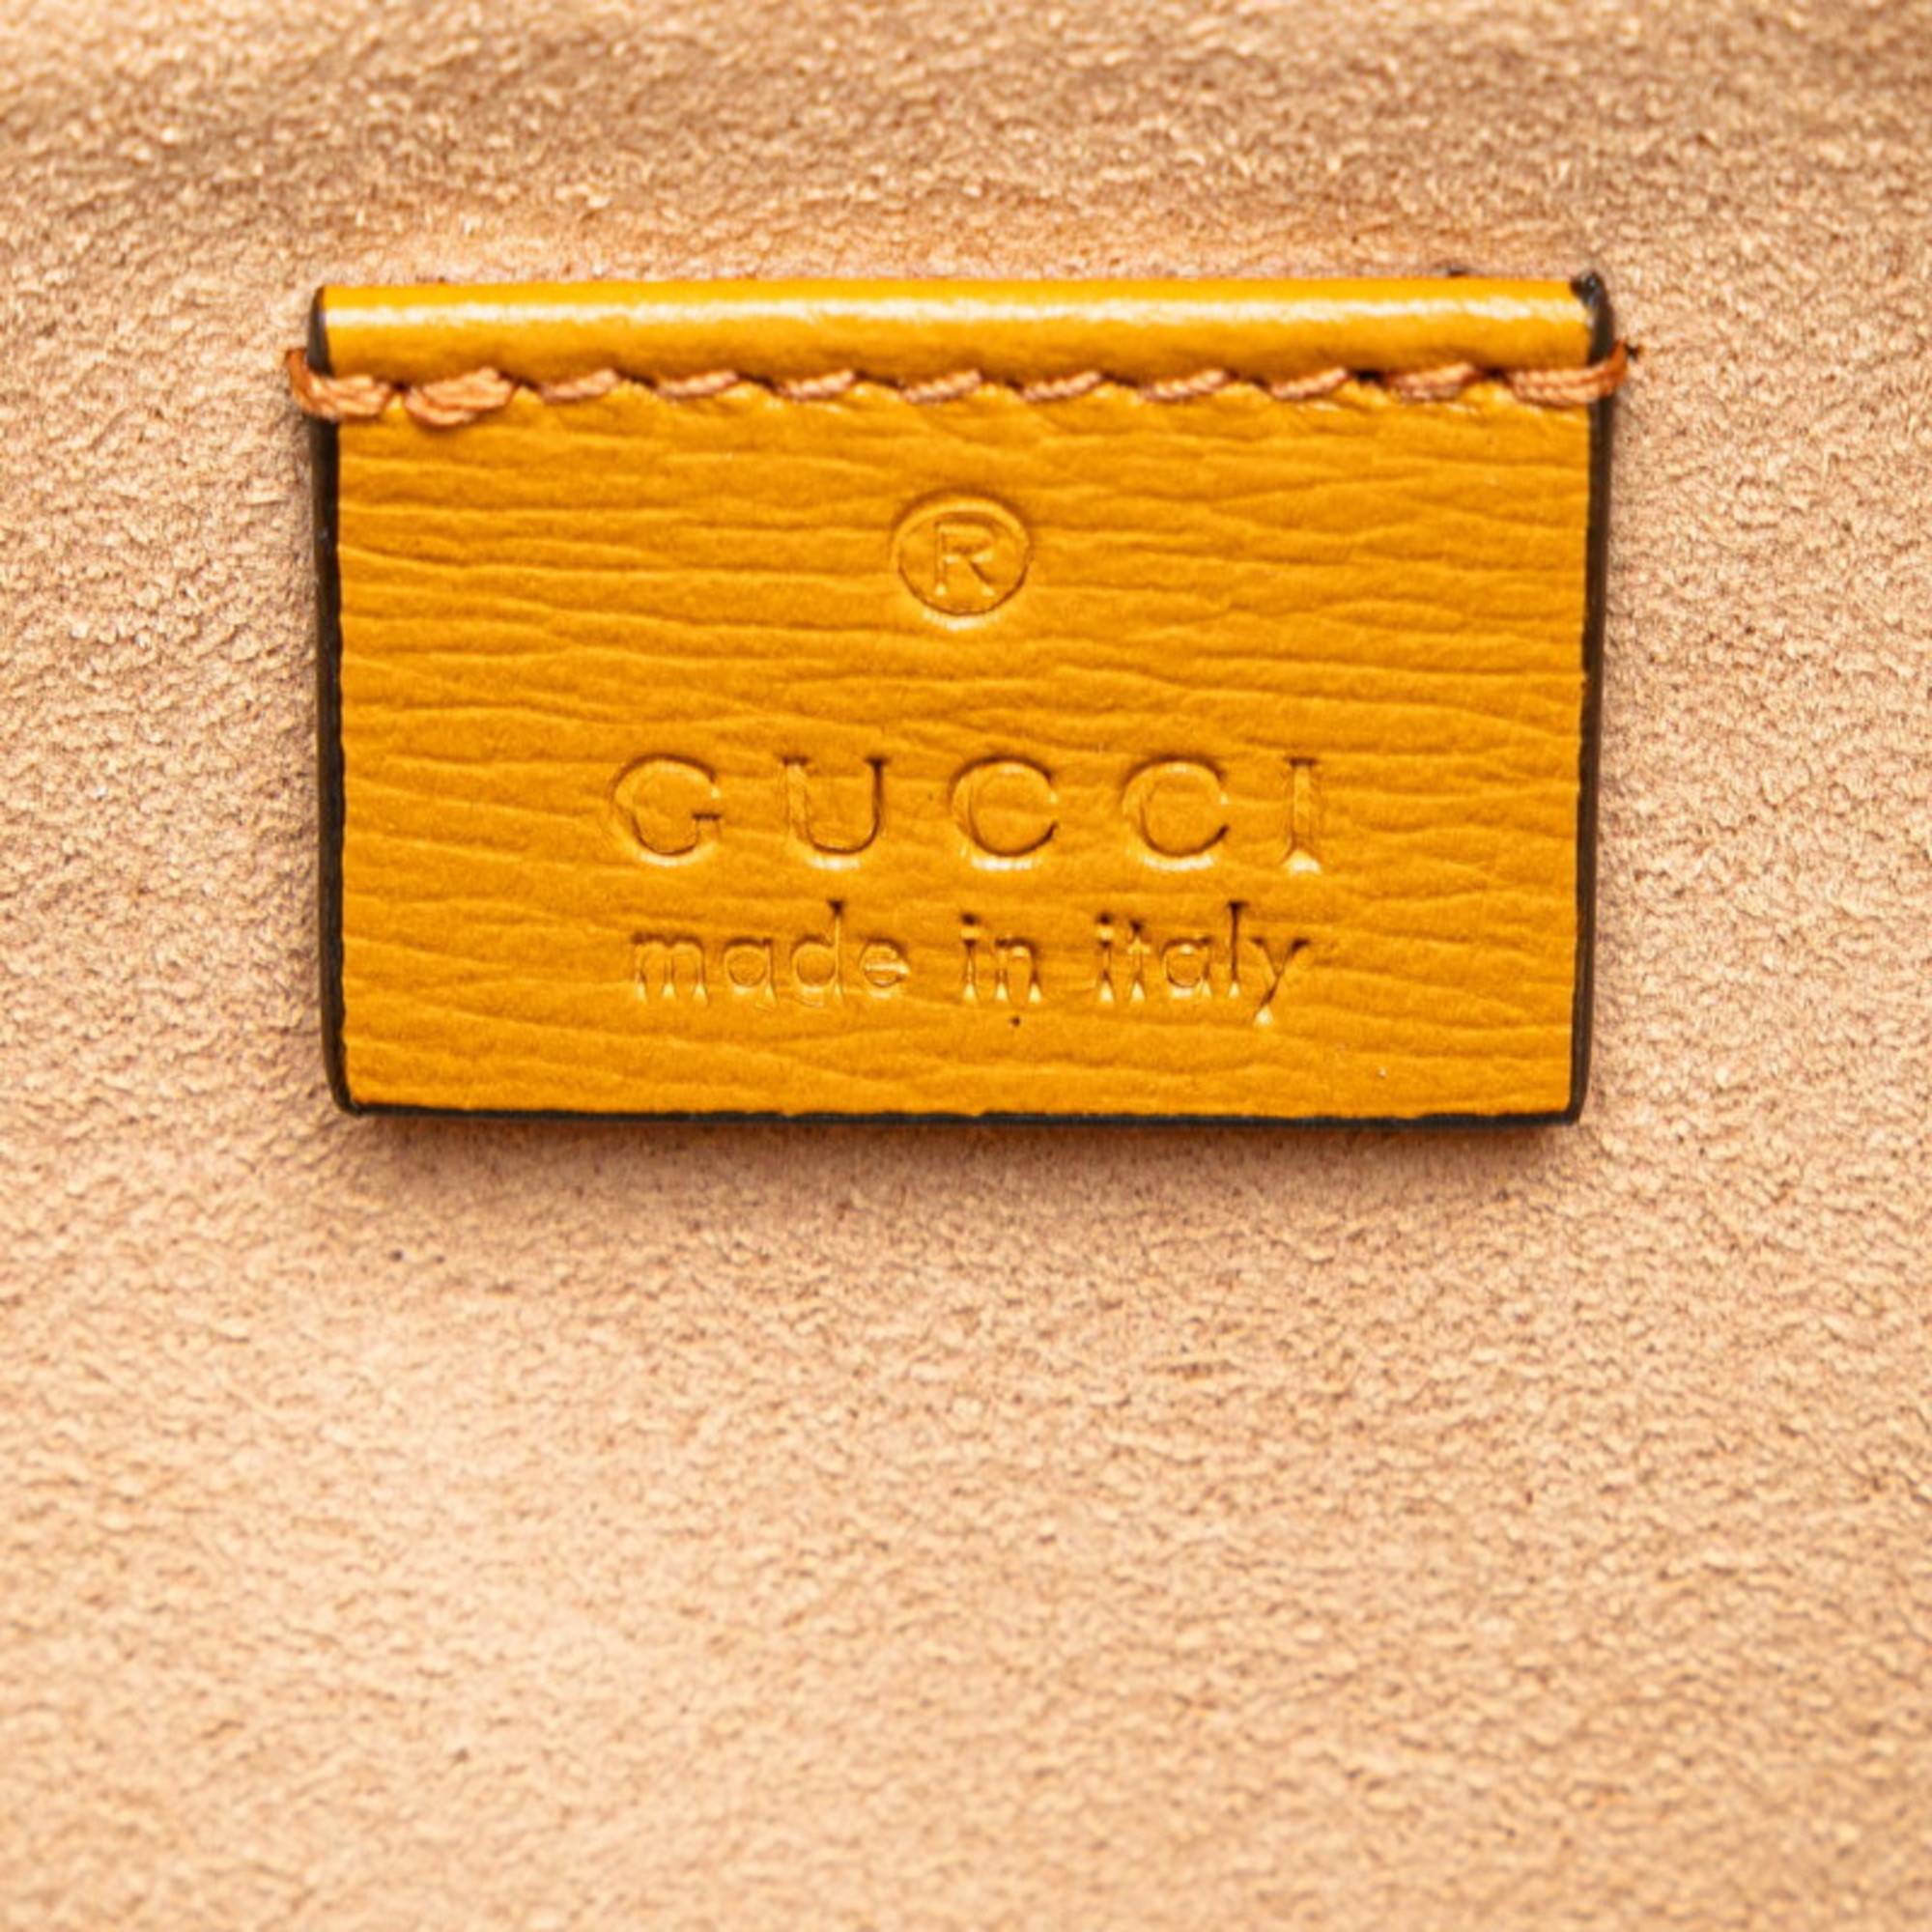 Gucci GG Supreme Interlocking G Second Bag Clutch 625764 Beige Yellow PVC Leather Women's GUCCI